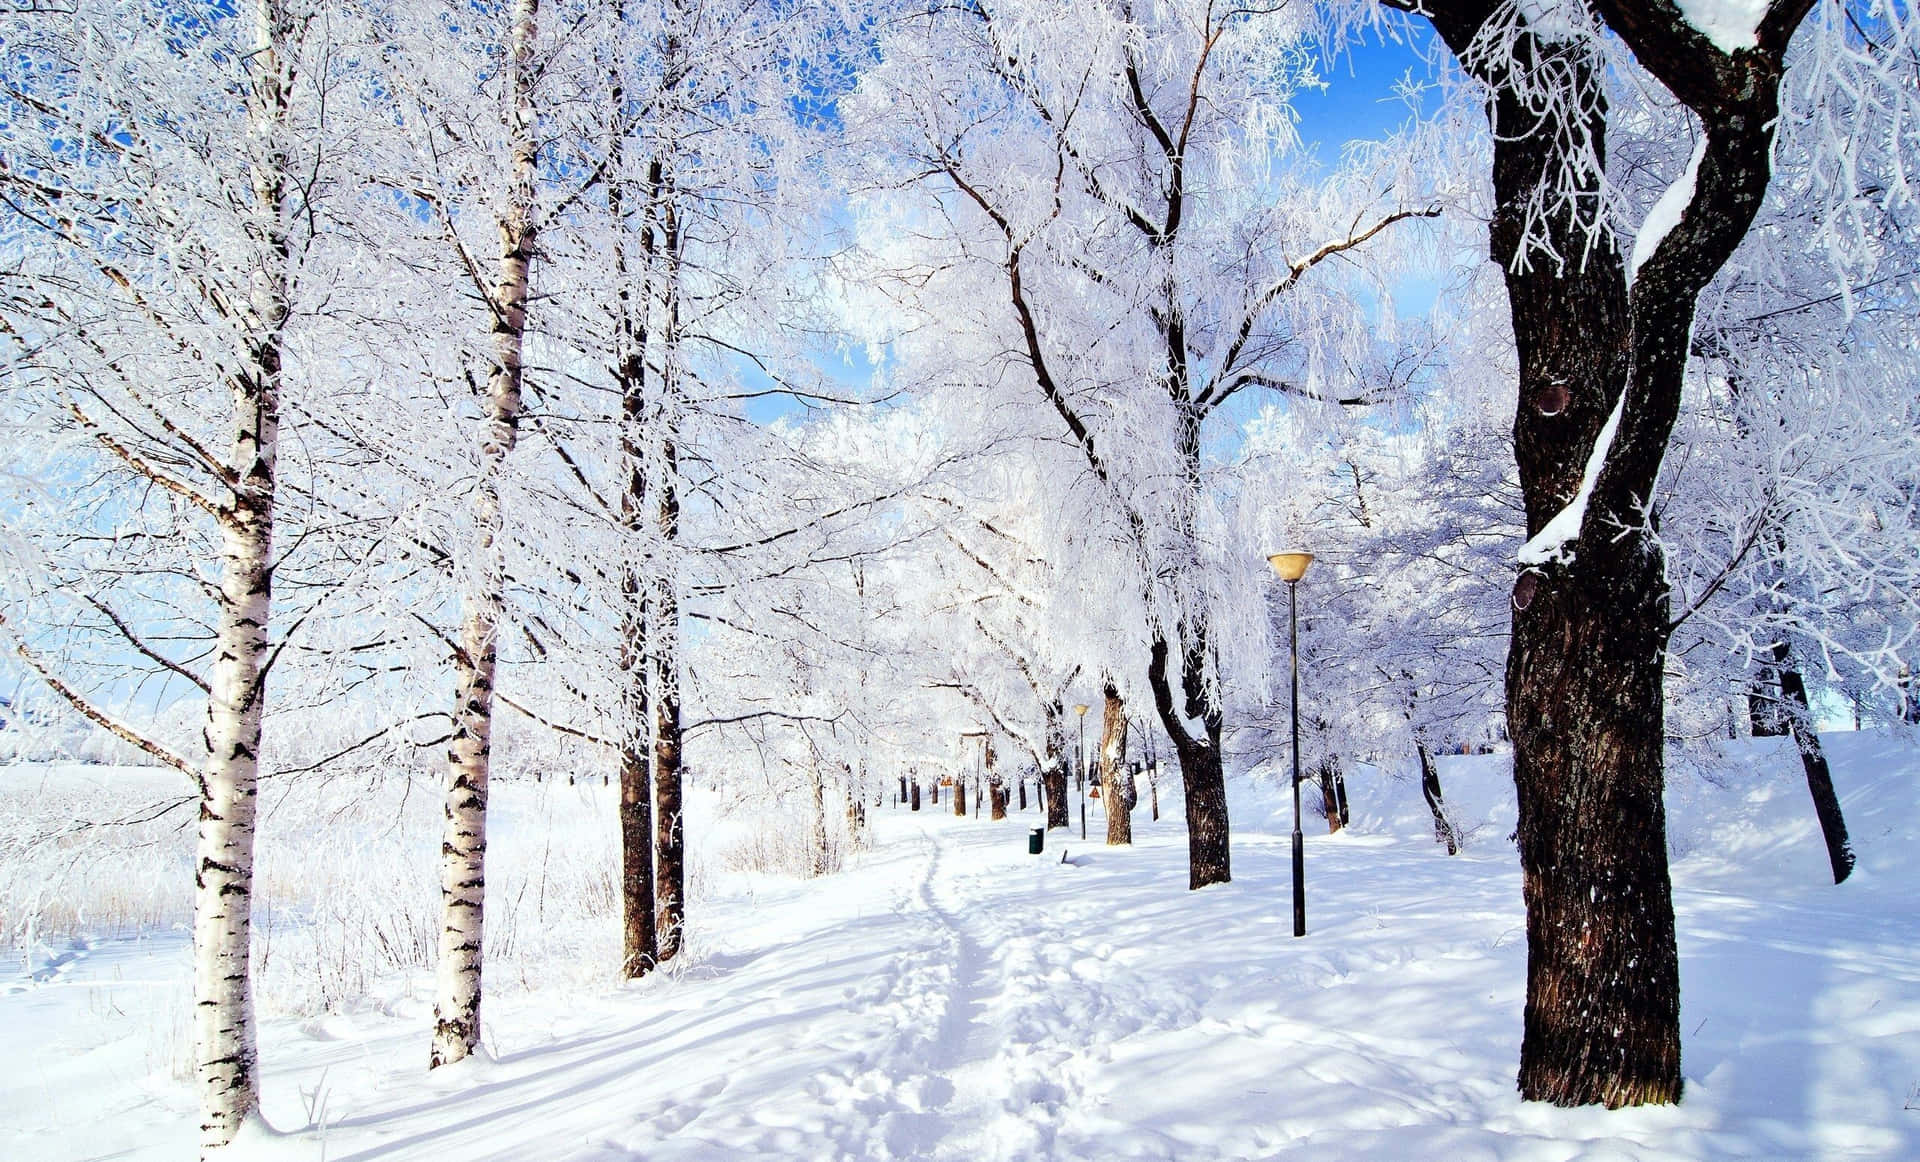 Download Magical Winter Wonderland Wallpaper | Wallpapers.com